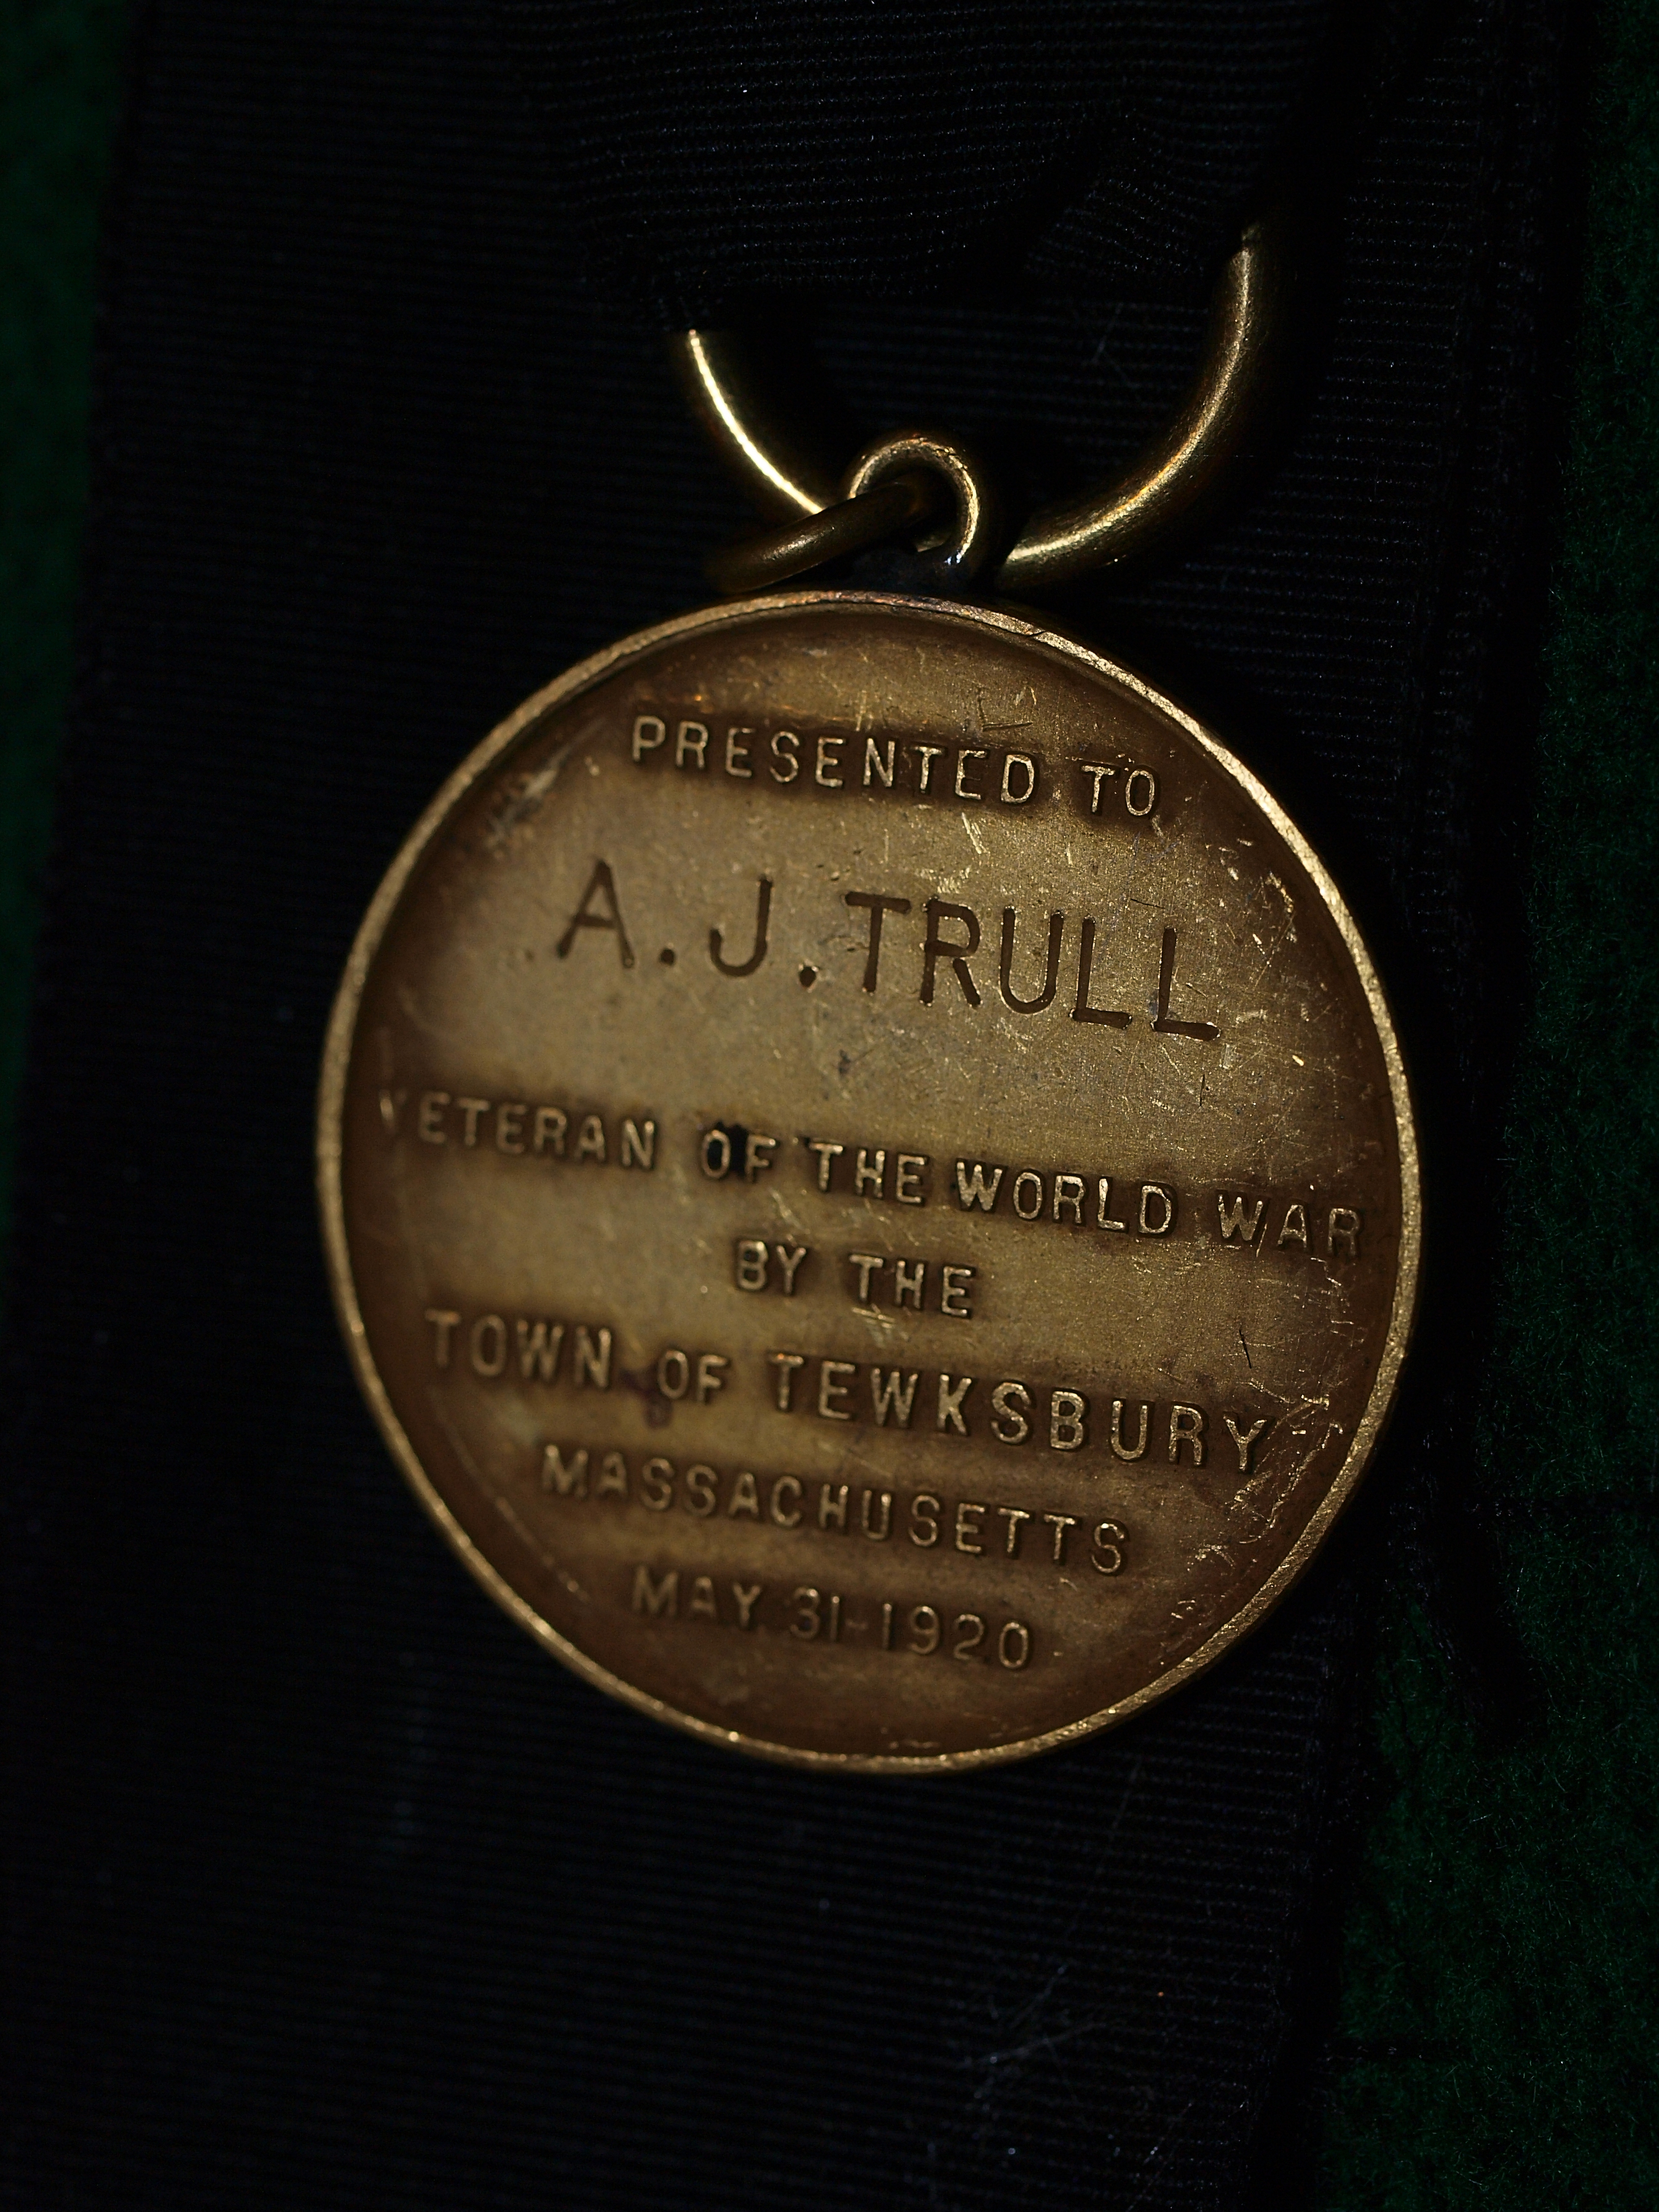 A. J. Trull World War I medal #2